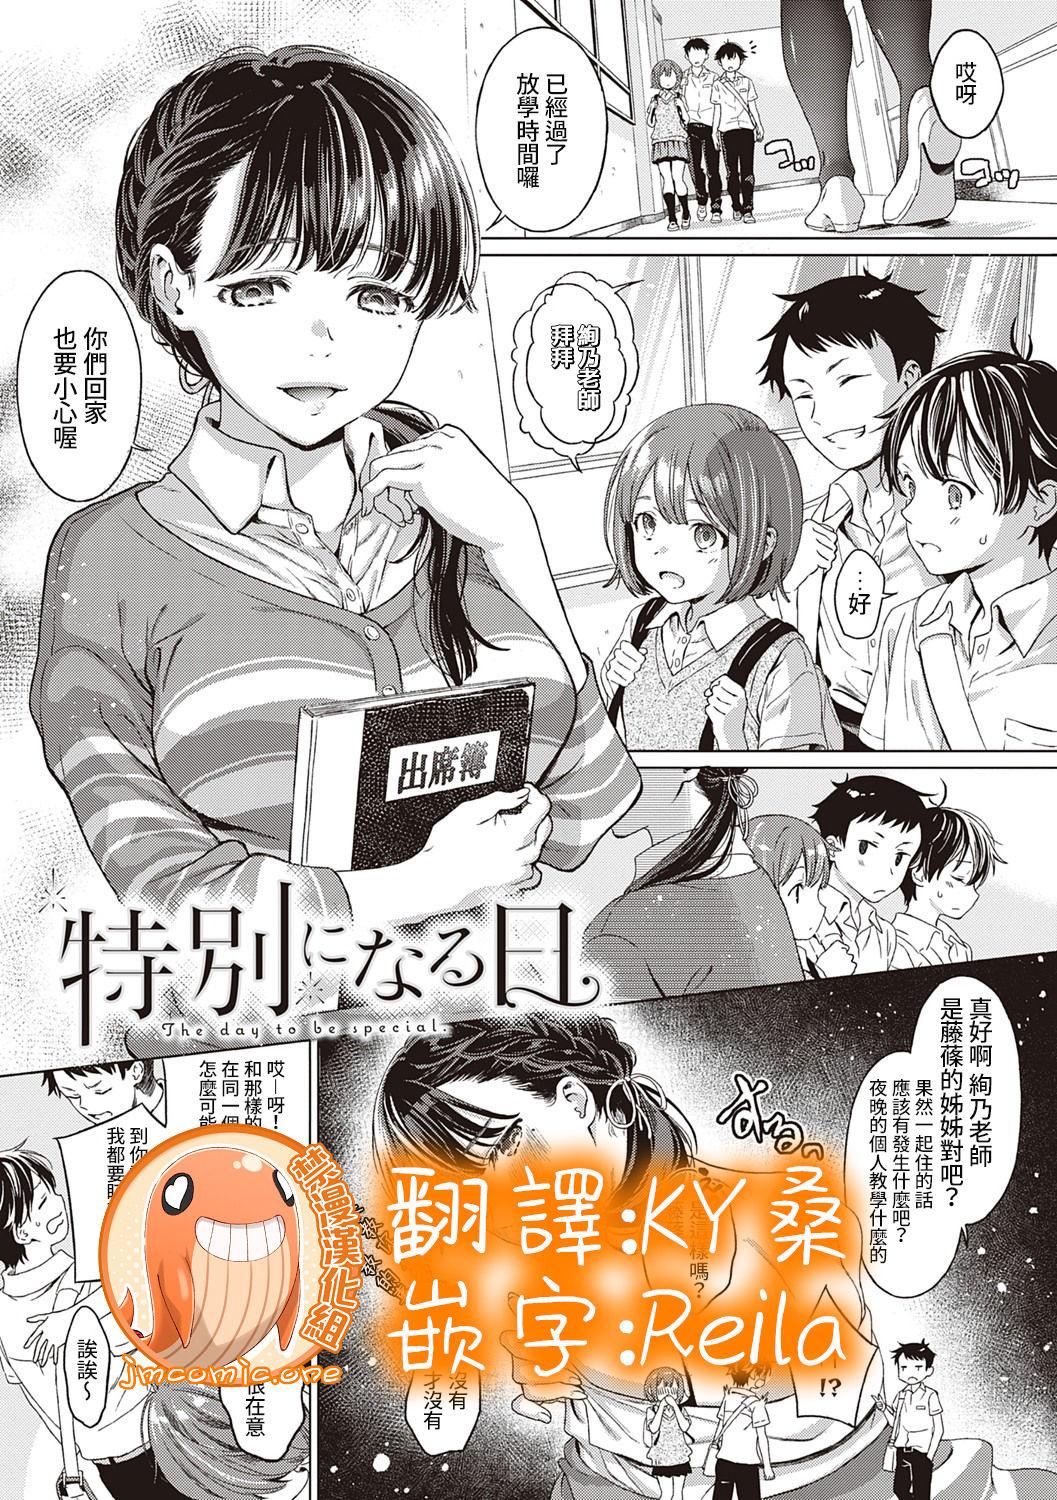 Reality Tokubetsu ni Naru Hi - The day to be special. Super - Page 1